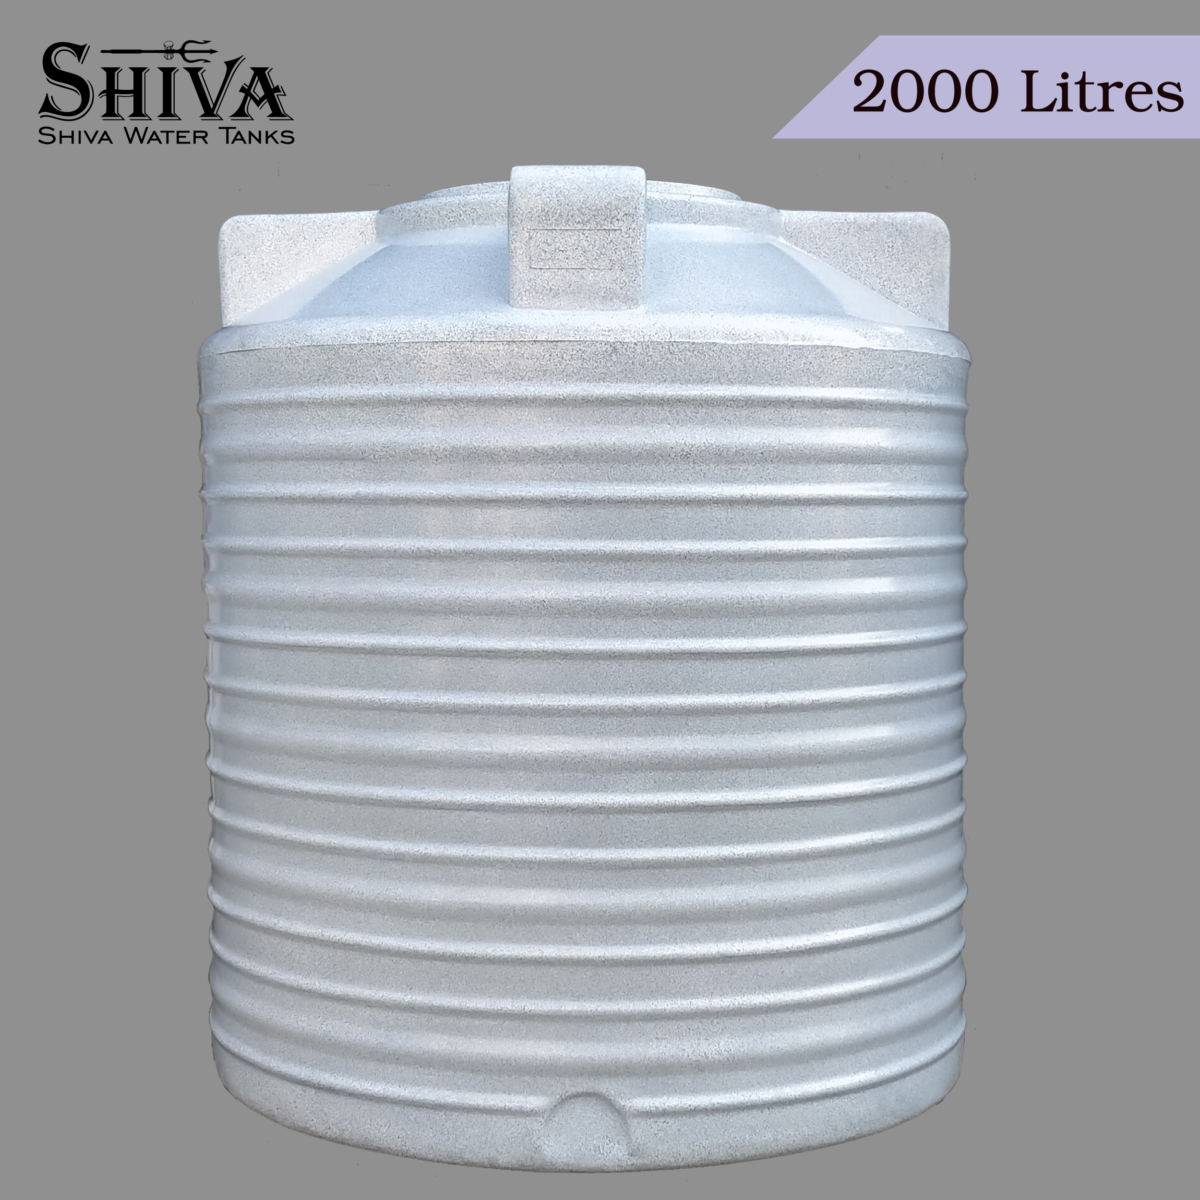 2000 Litres - SHIVA U-Form - 4 Layers